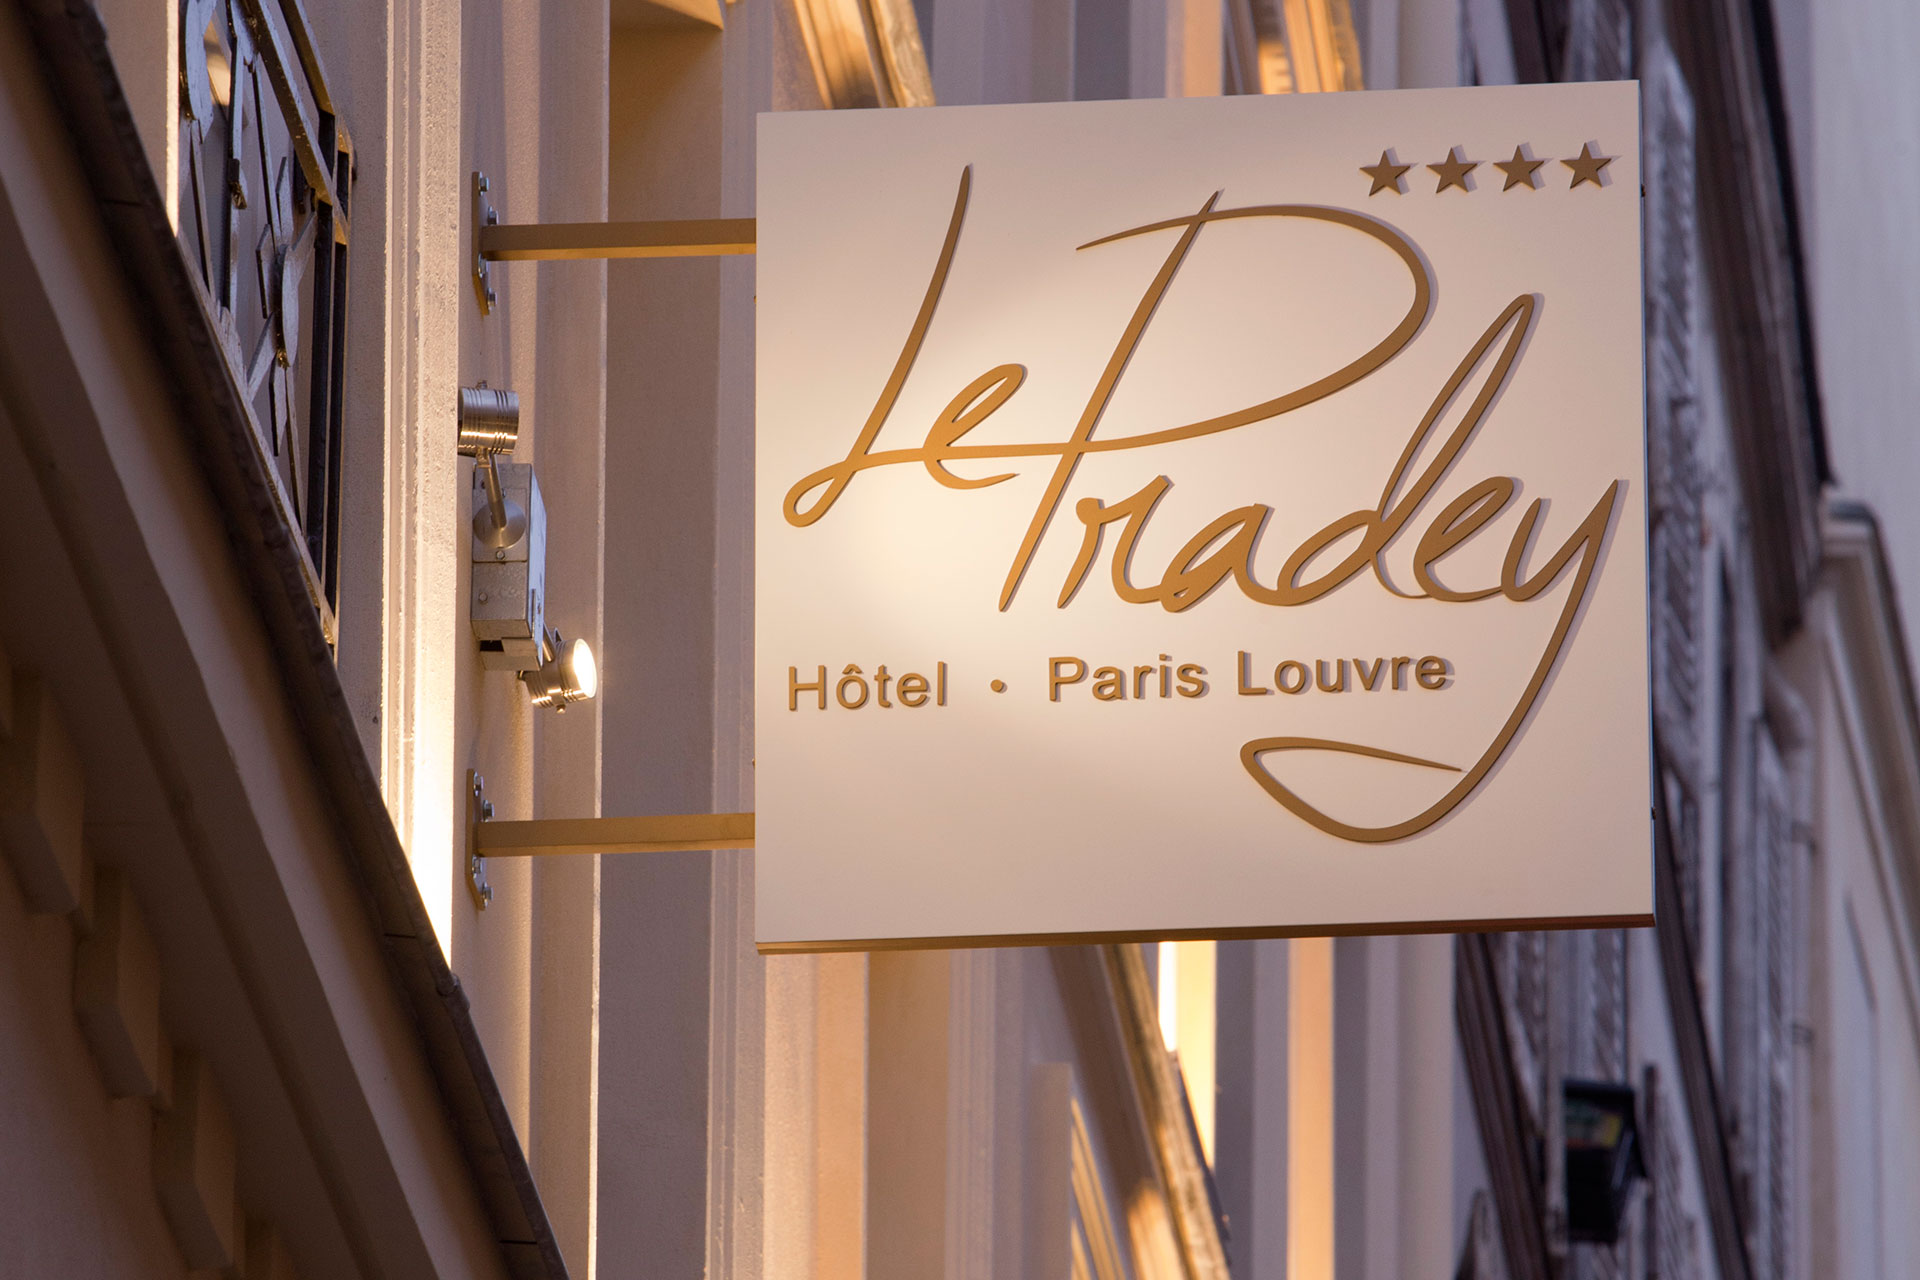 l’hôtel Le Pradey